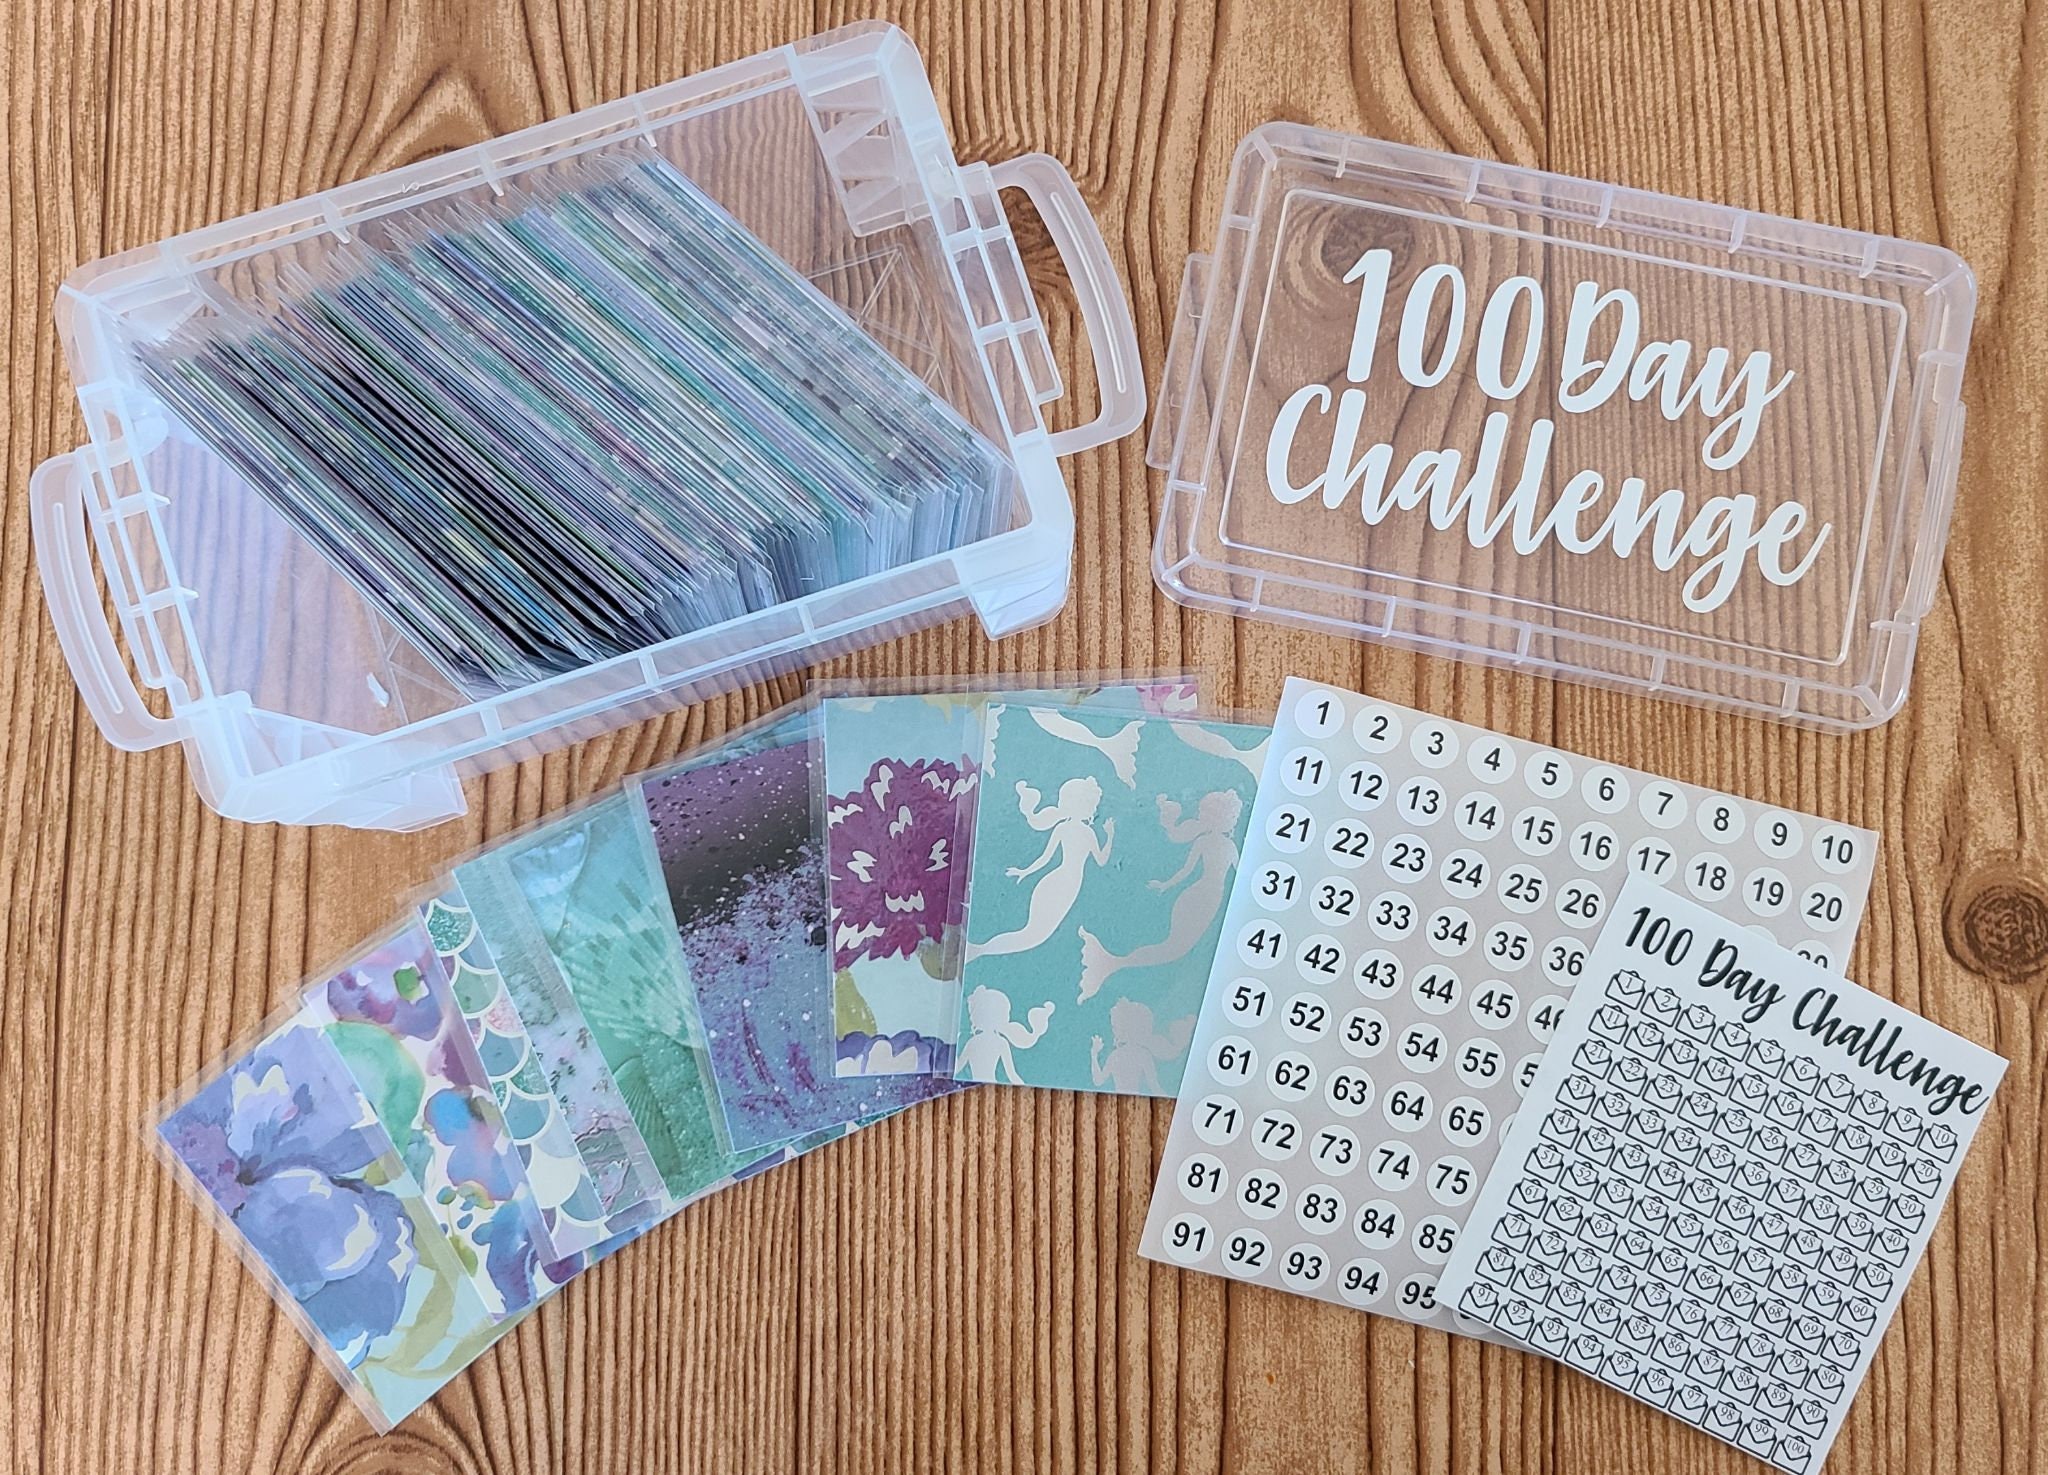 100 Envelopes Money Saving Challenge | Finance Challenge | 100 day envelope  challenge kit: Unique and Interactive Money Saving Challenge Book | money